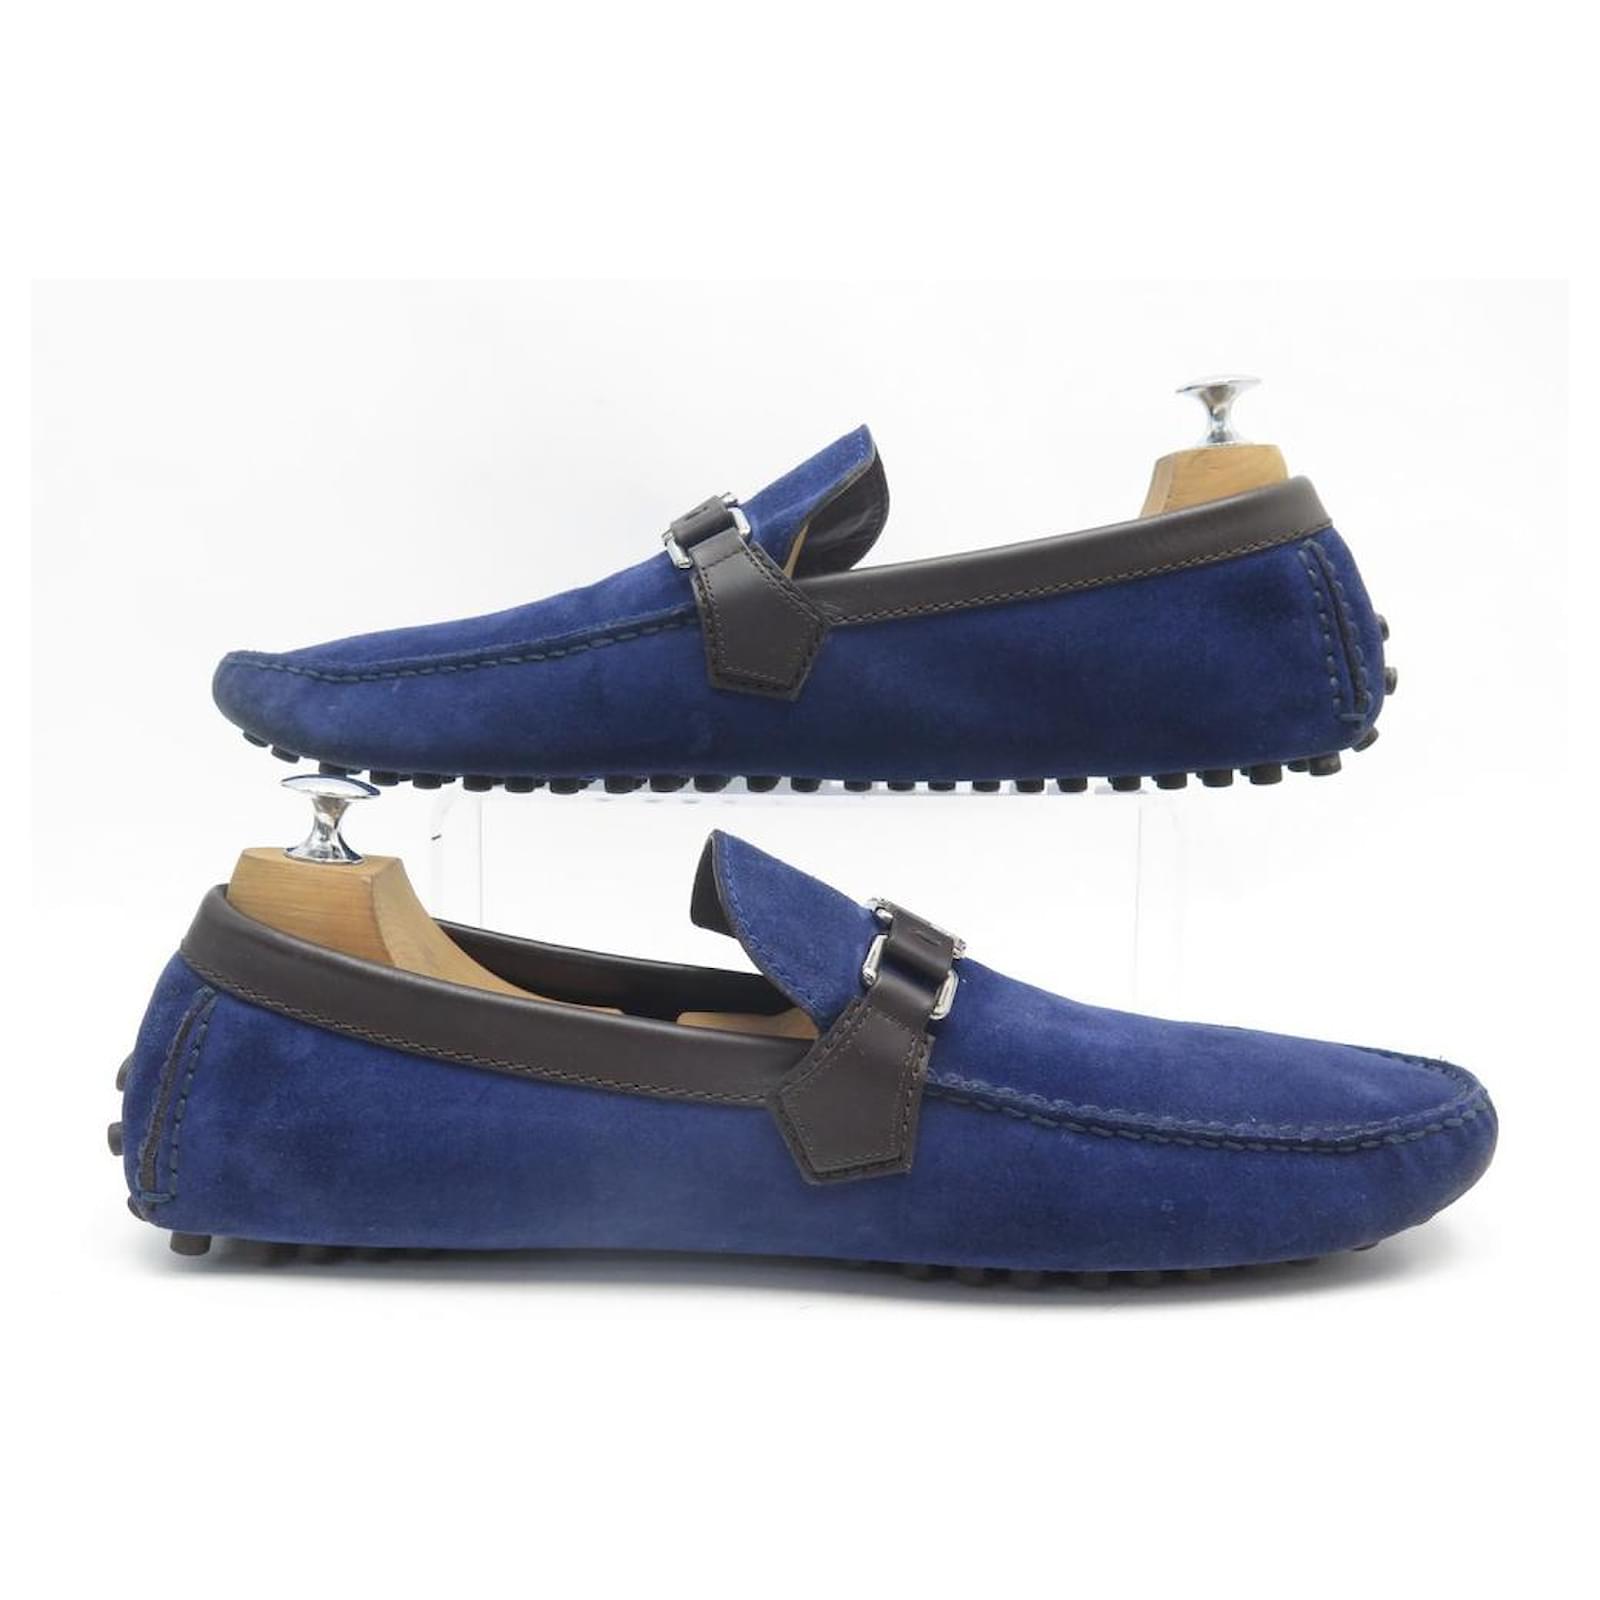 LOUIS VUITTON Summerland Boat Shoes Men Suede Navy Blue Loafers